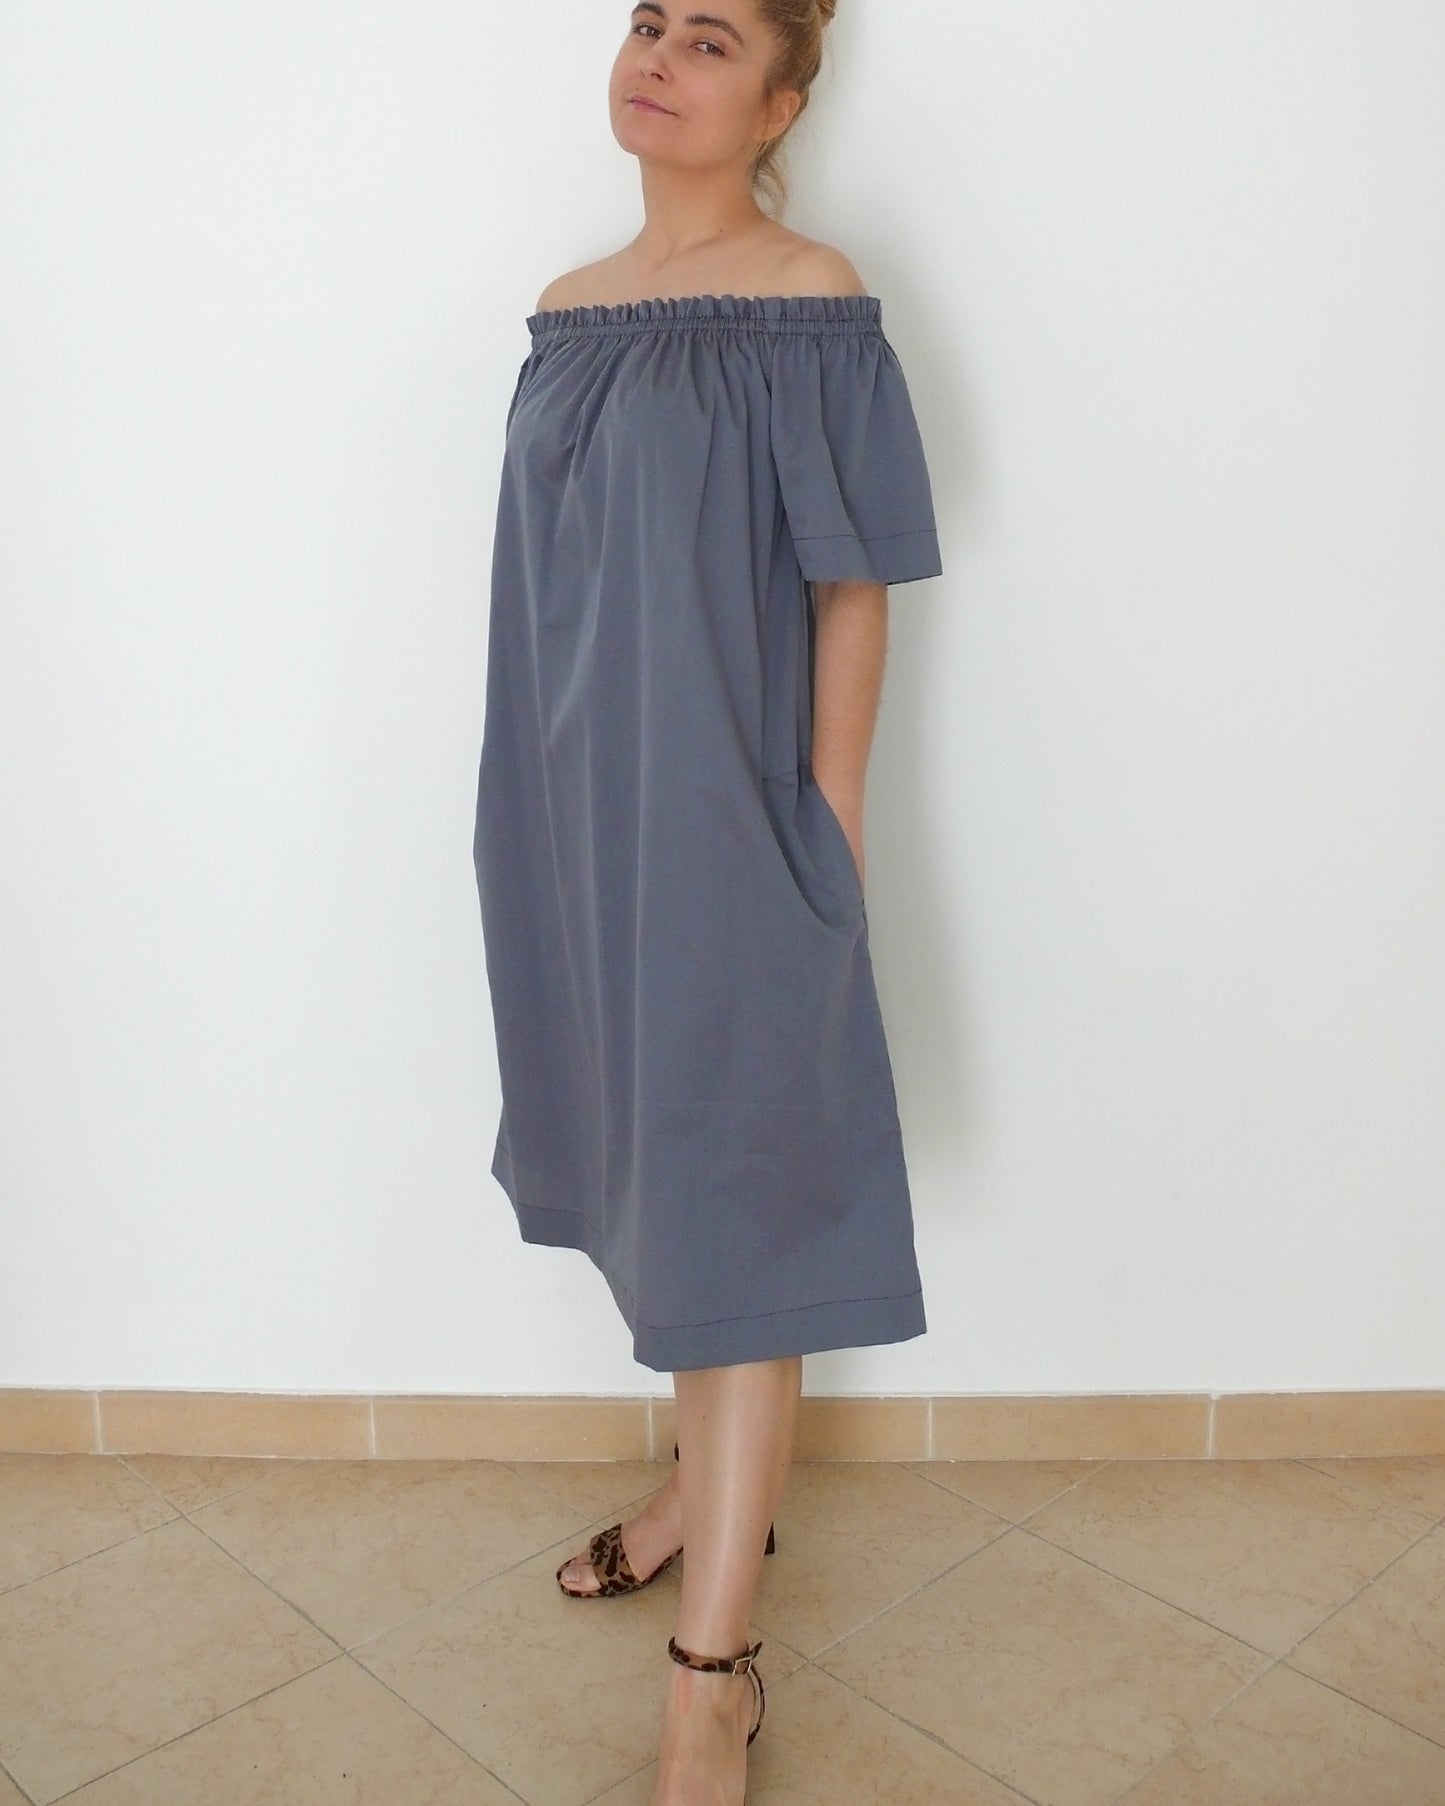 Off-shoulder Top or Dress, Sewing Pattern N.79